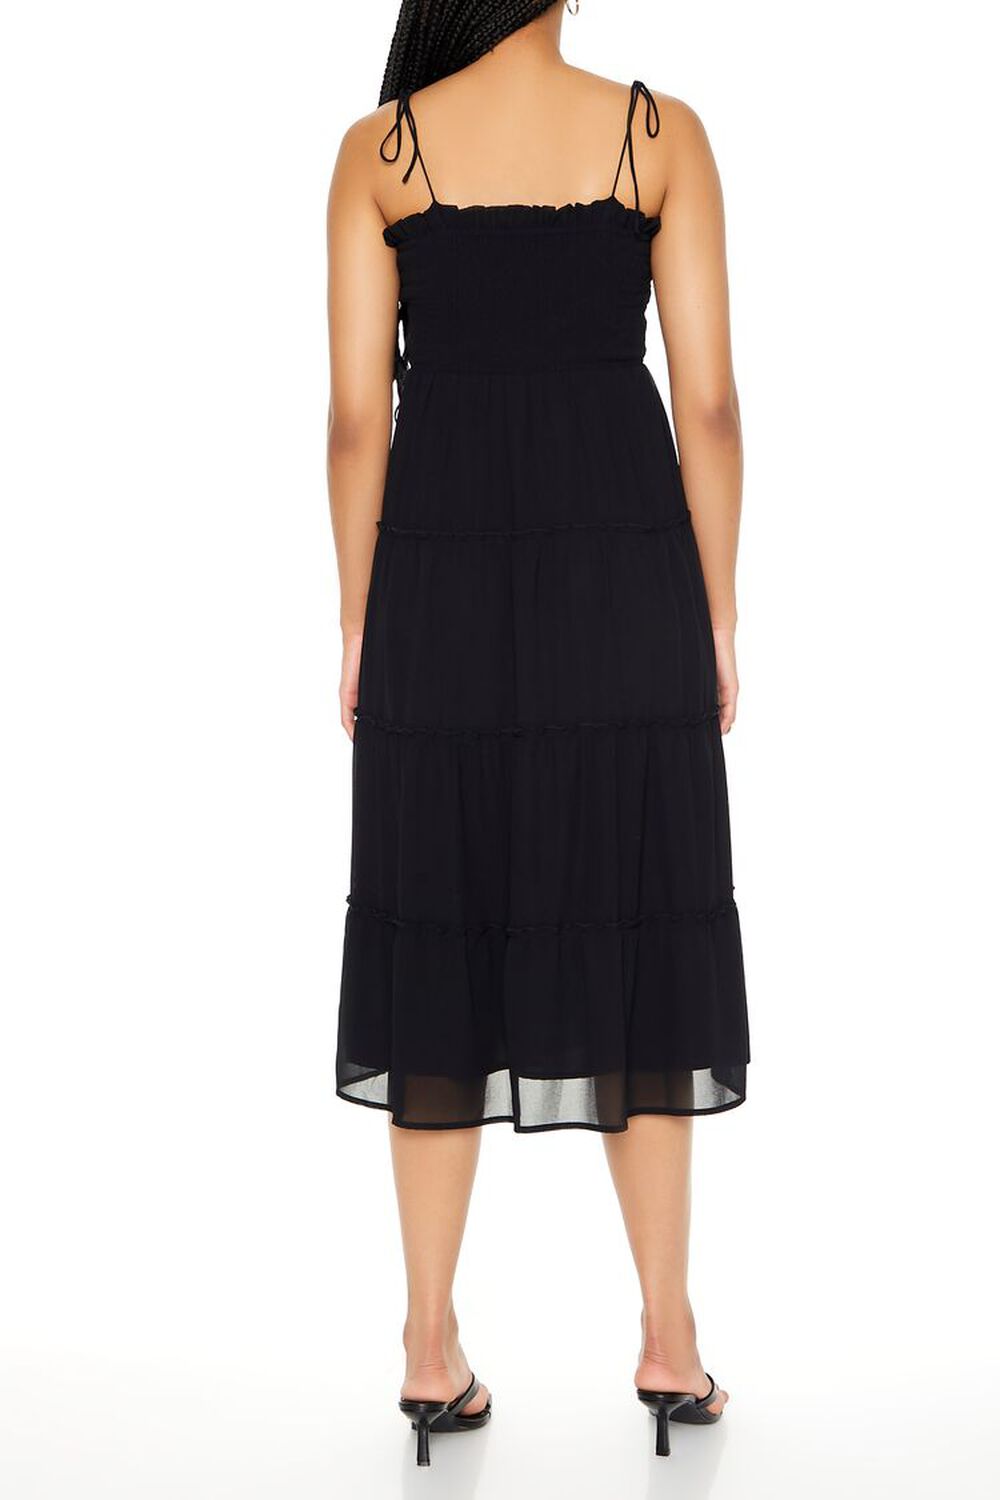 BLACK Tiered Self-Tie Cami Midi Dress, image 3